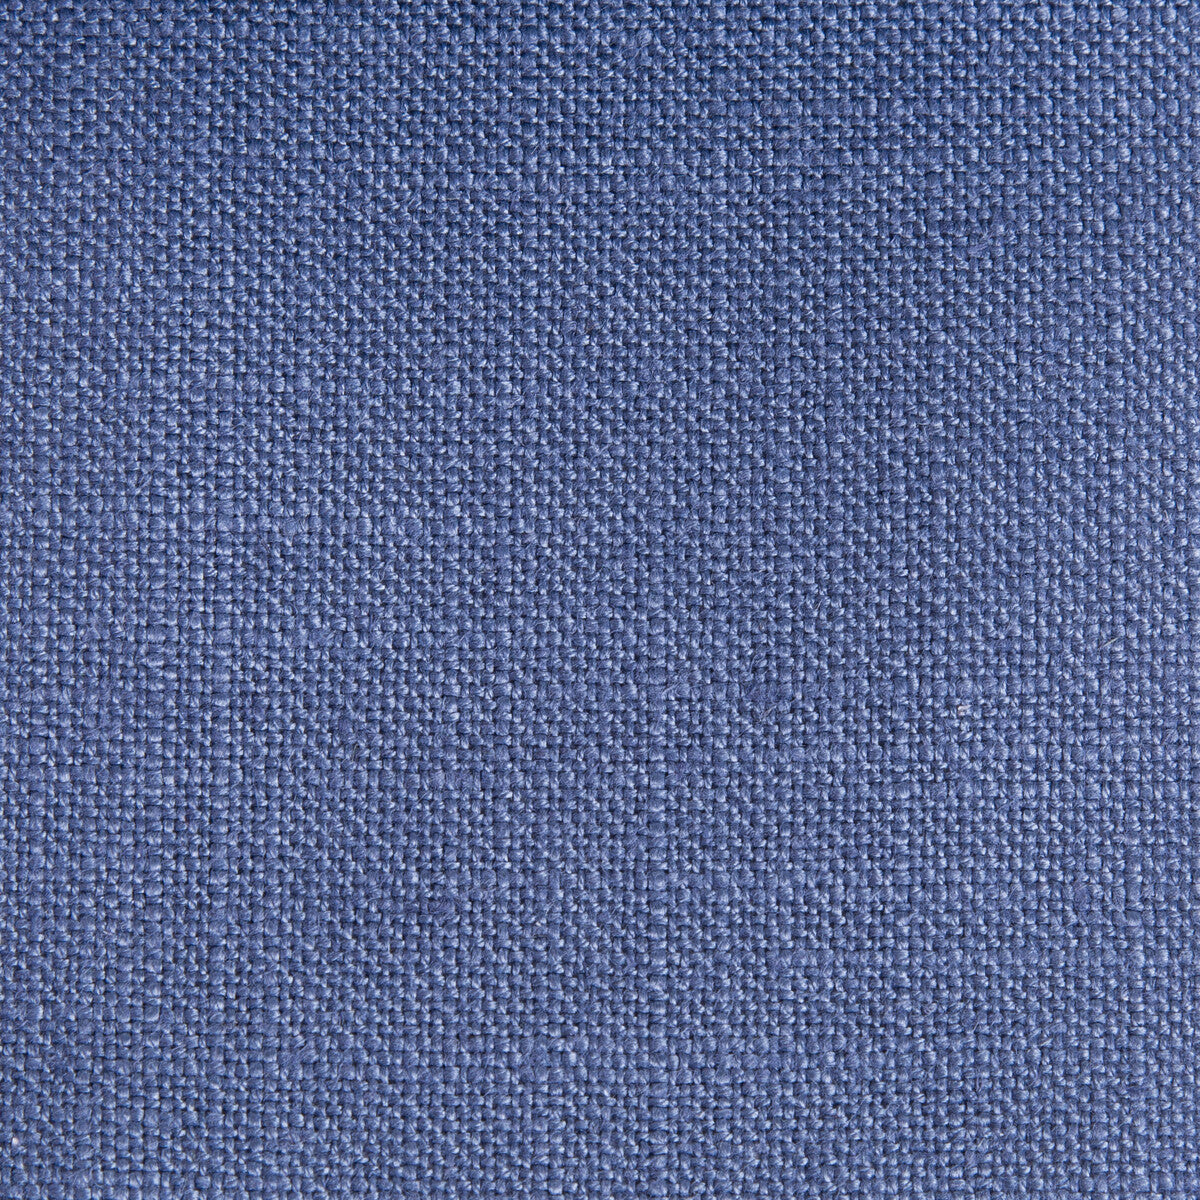 Peru fabric in azul color - pattern GDT5548.018.0 - by Gaston y Daniela in the Gaston Nuevo Mundo collection